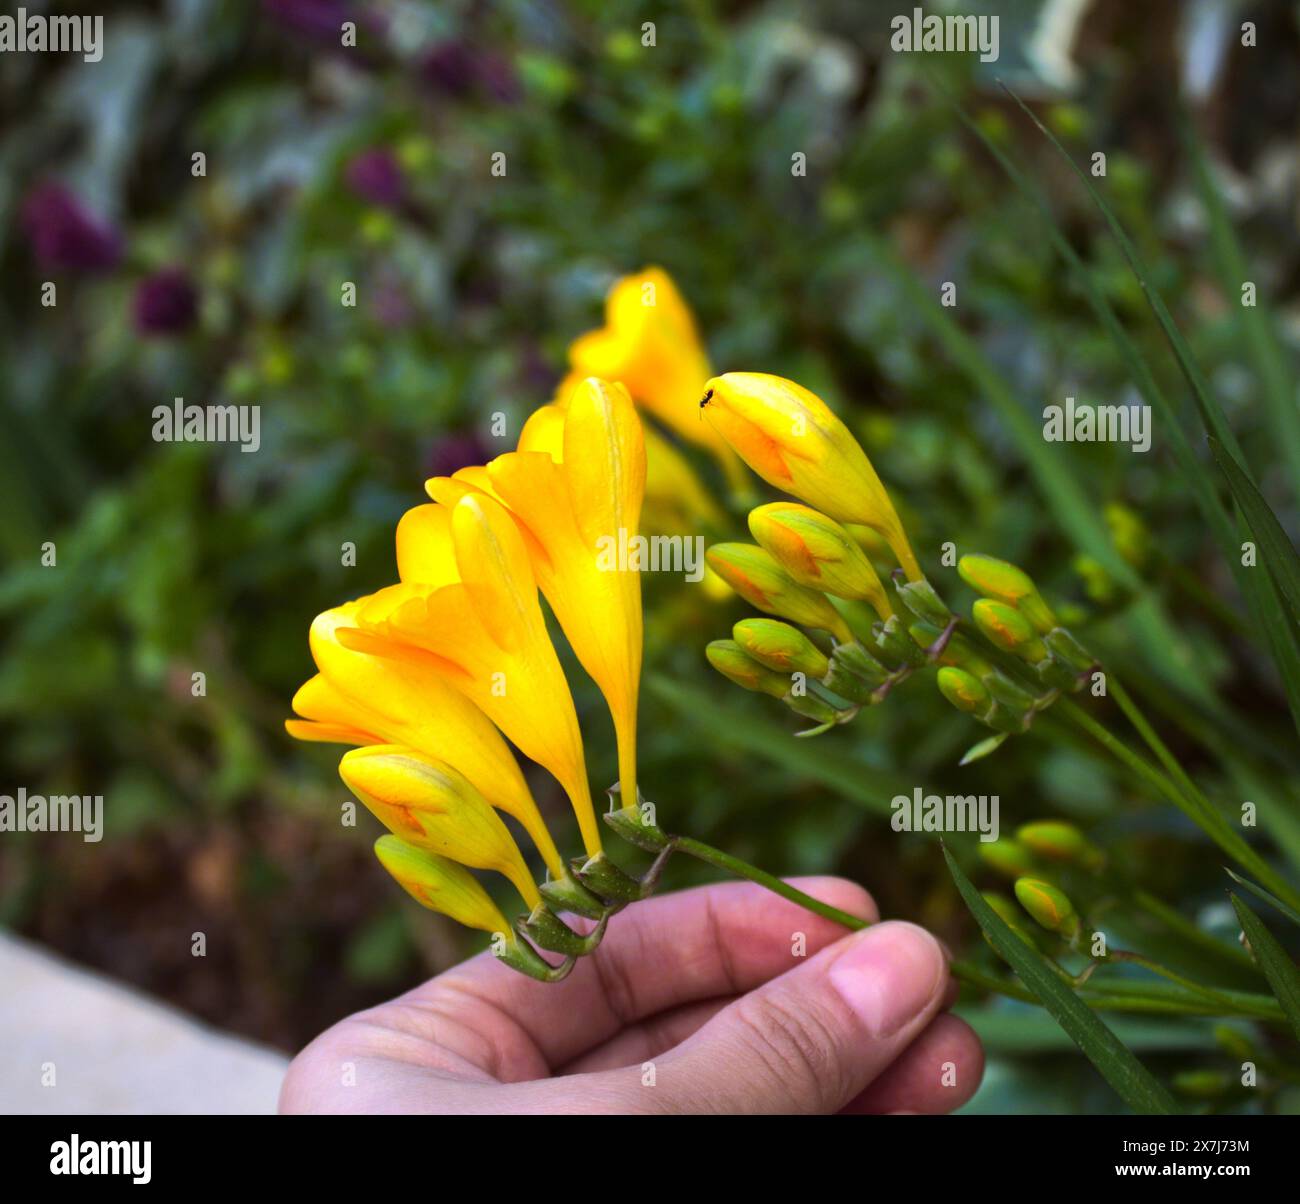 Yellow Freesia, Freesia refracta  (Iridaceae Family) is a genus of herbaceous perennial flowering plants. Stock Photo